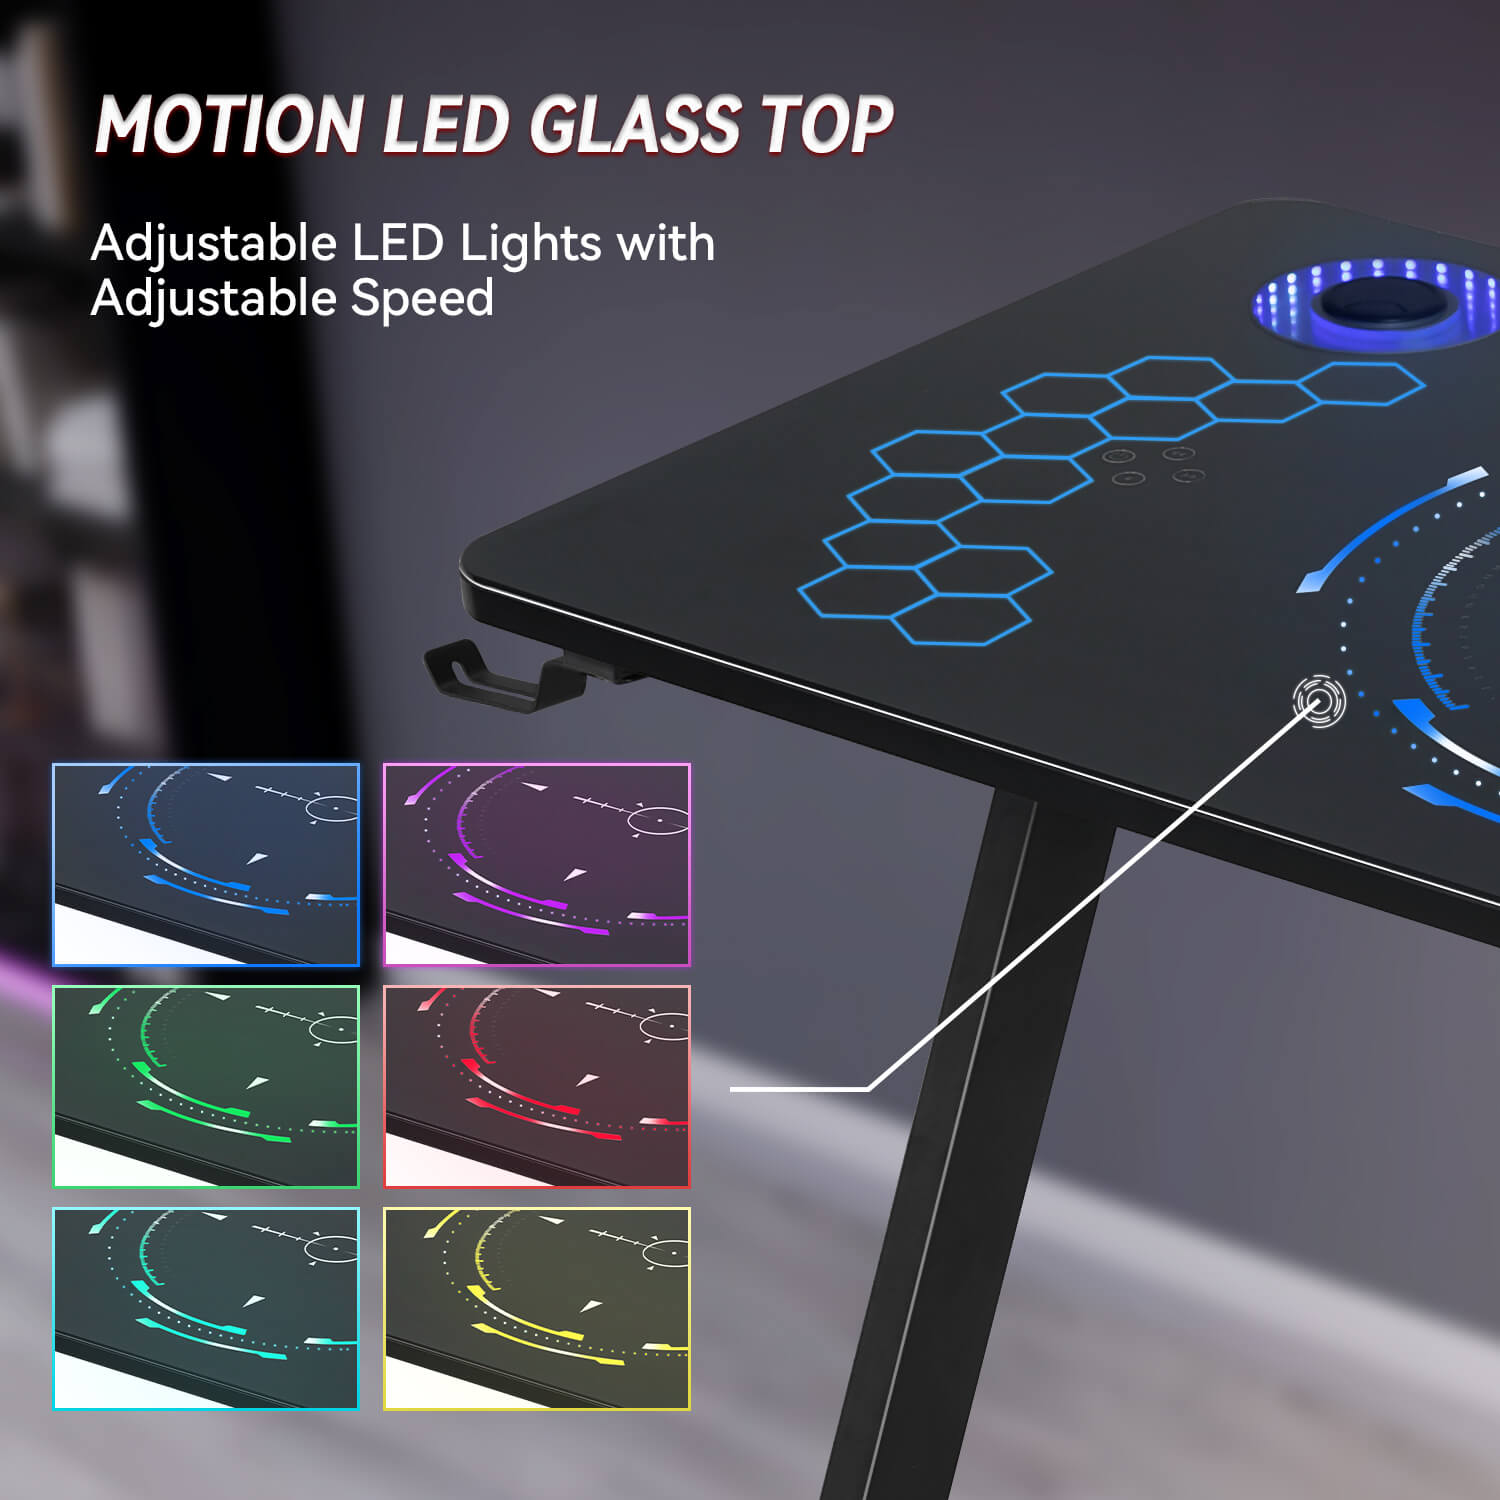 Motion LED glass top details of Gaming Desk with LED Lights OC125